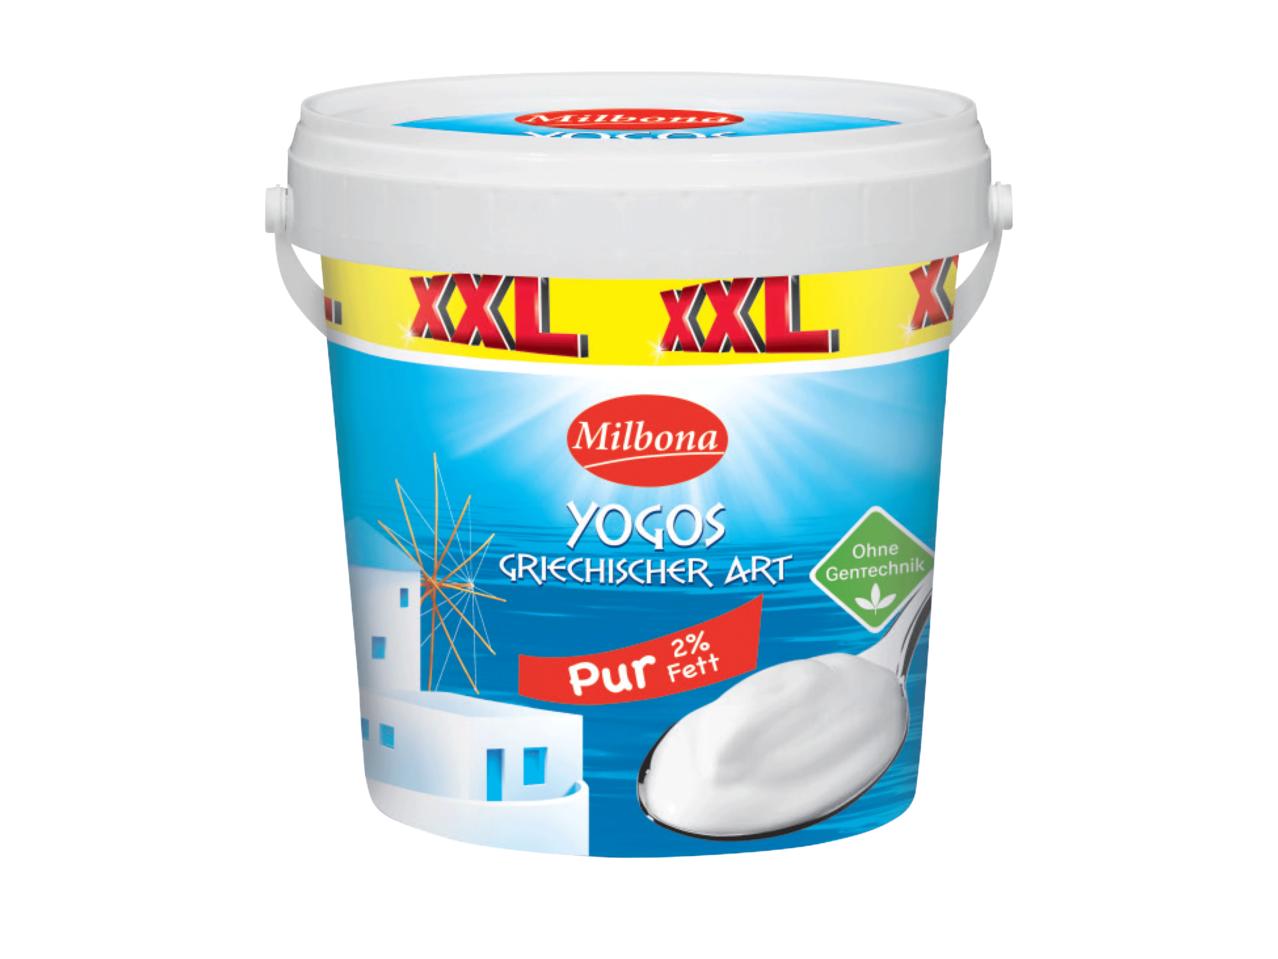 MILBONA Low Fat Greek Style Yogurt